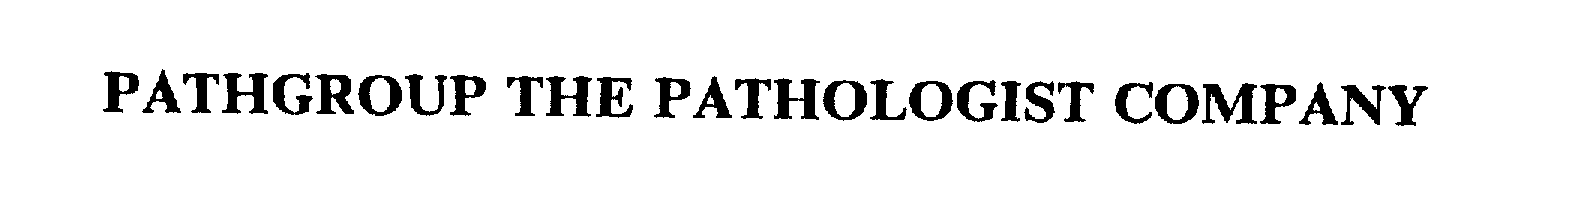  PATHGROUP THE PATHOLOGIST COMPANY